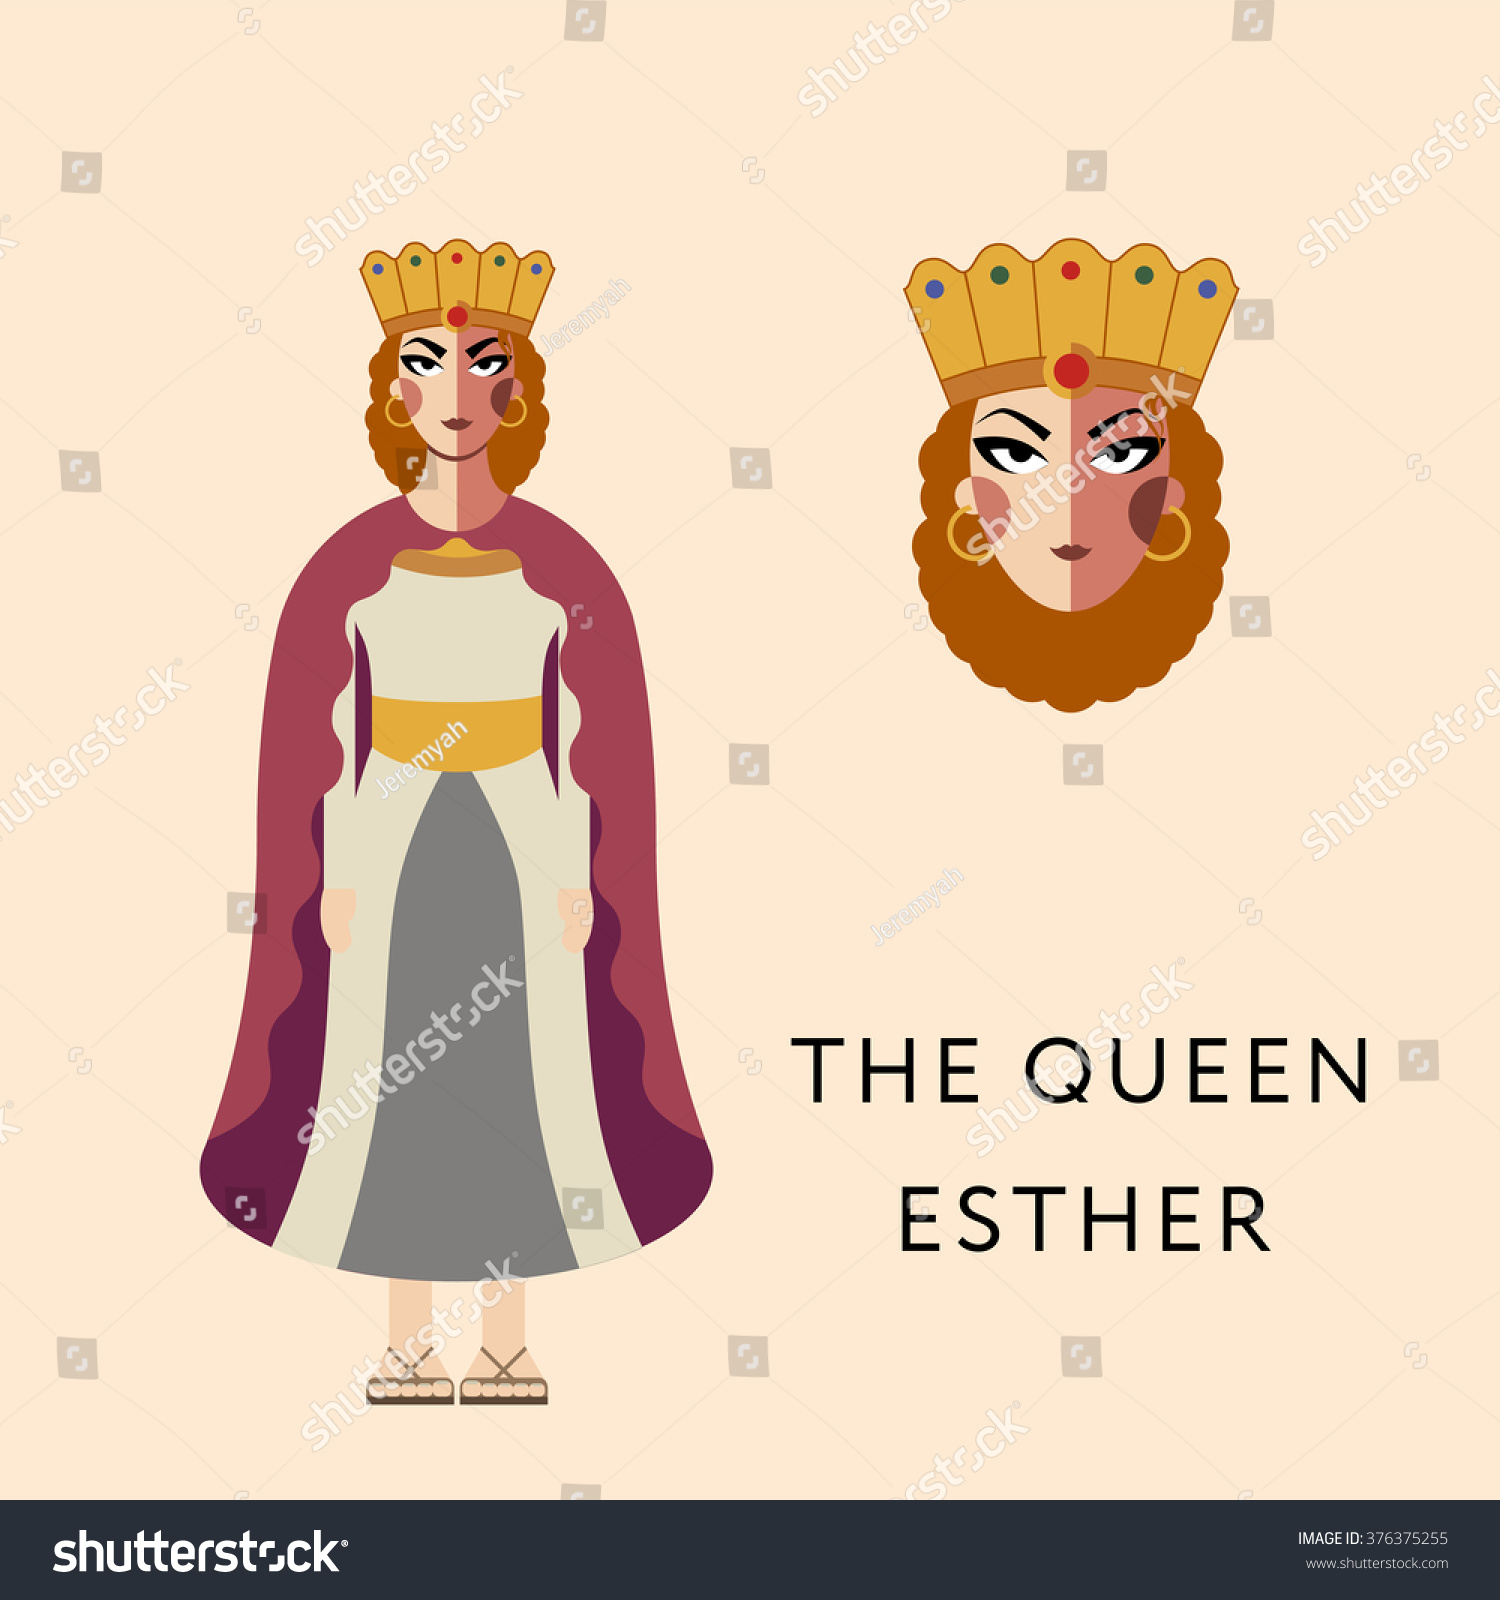 queen esther clipart - photo #40